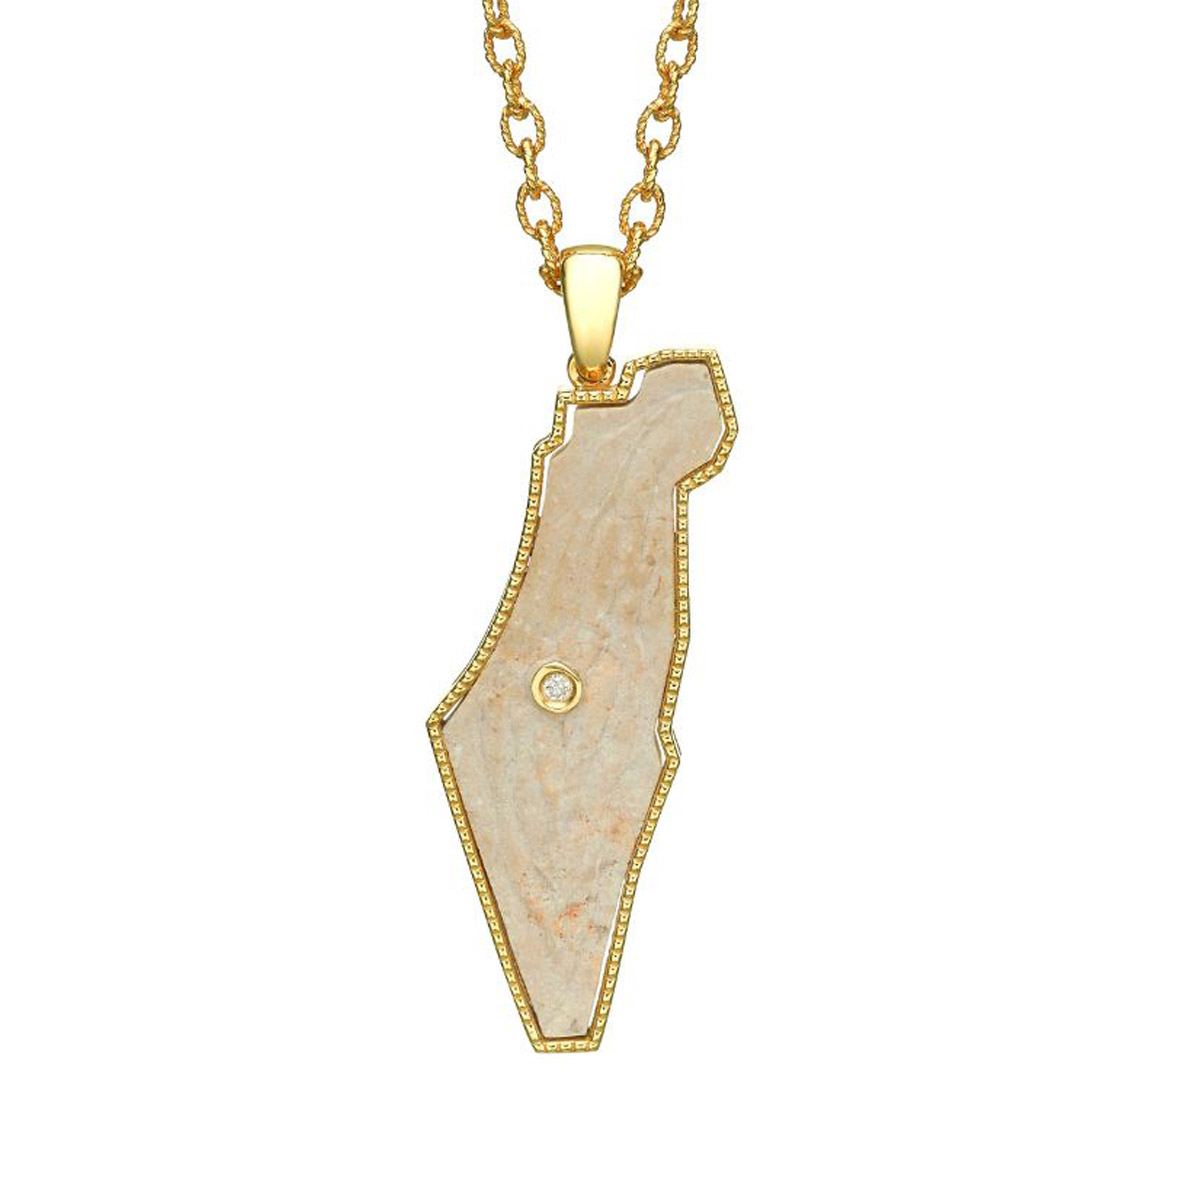 Map of Israel pendant